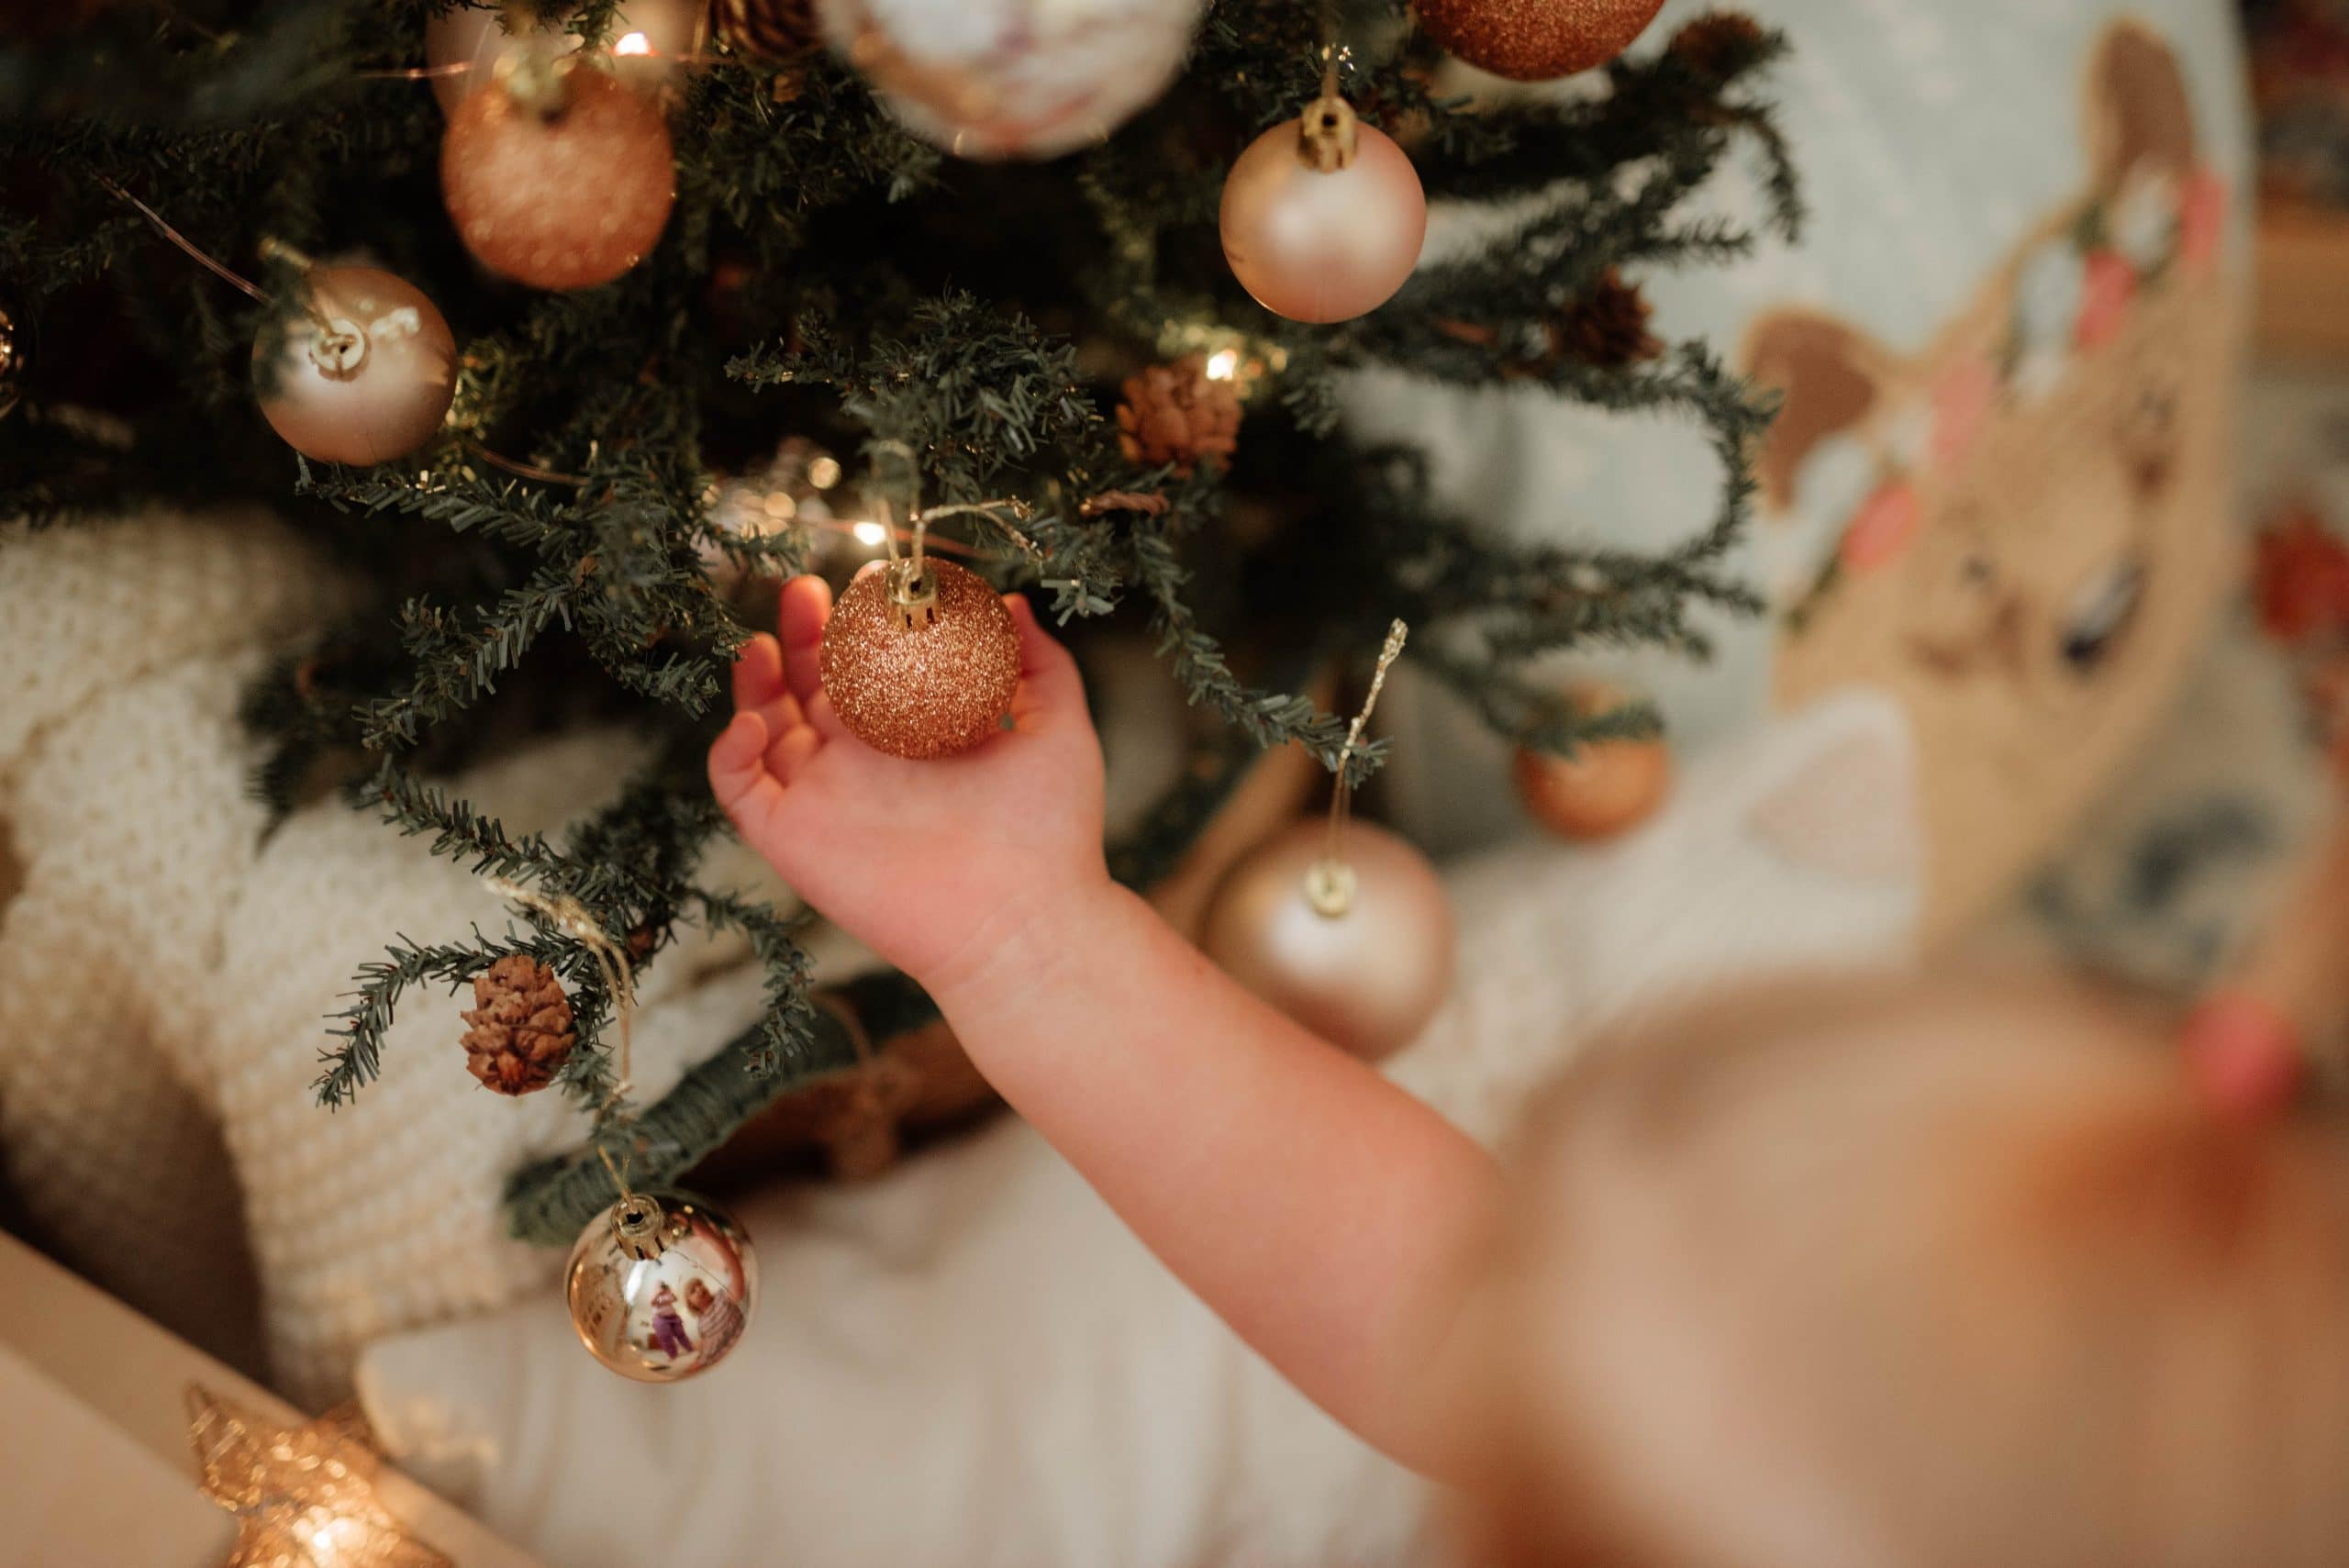 A Little Christmas Decorating | Uncategorized - Jennifer Duke Photography